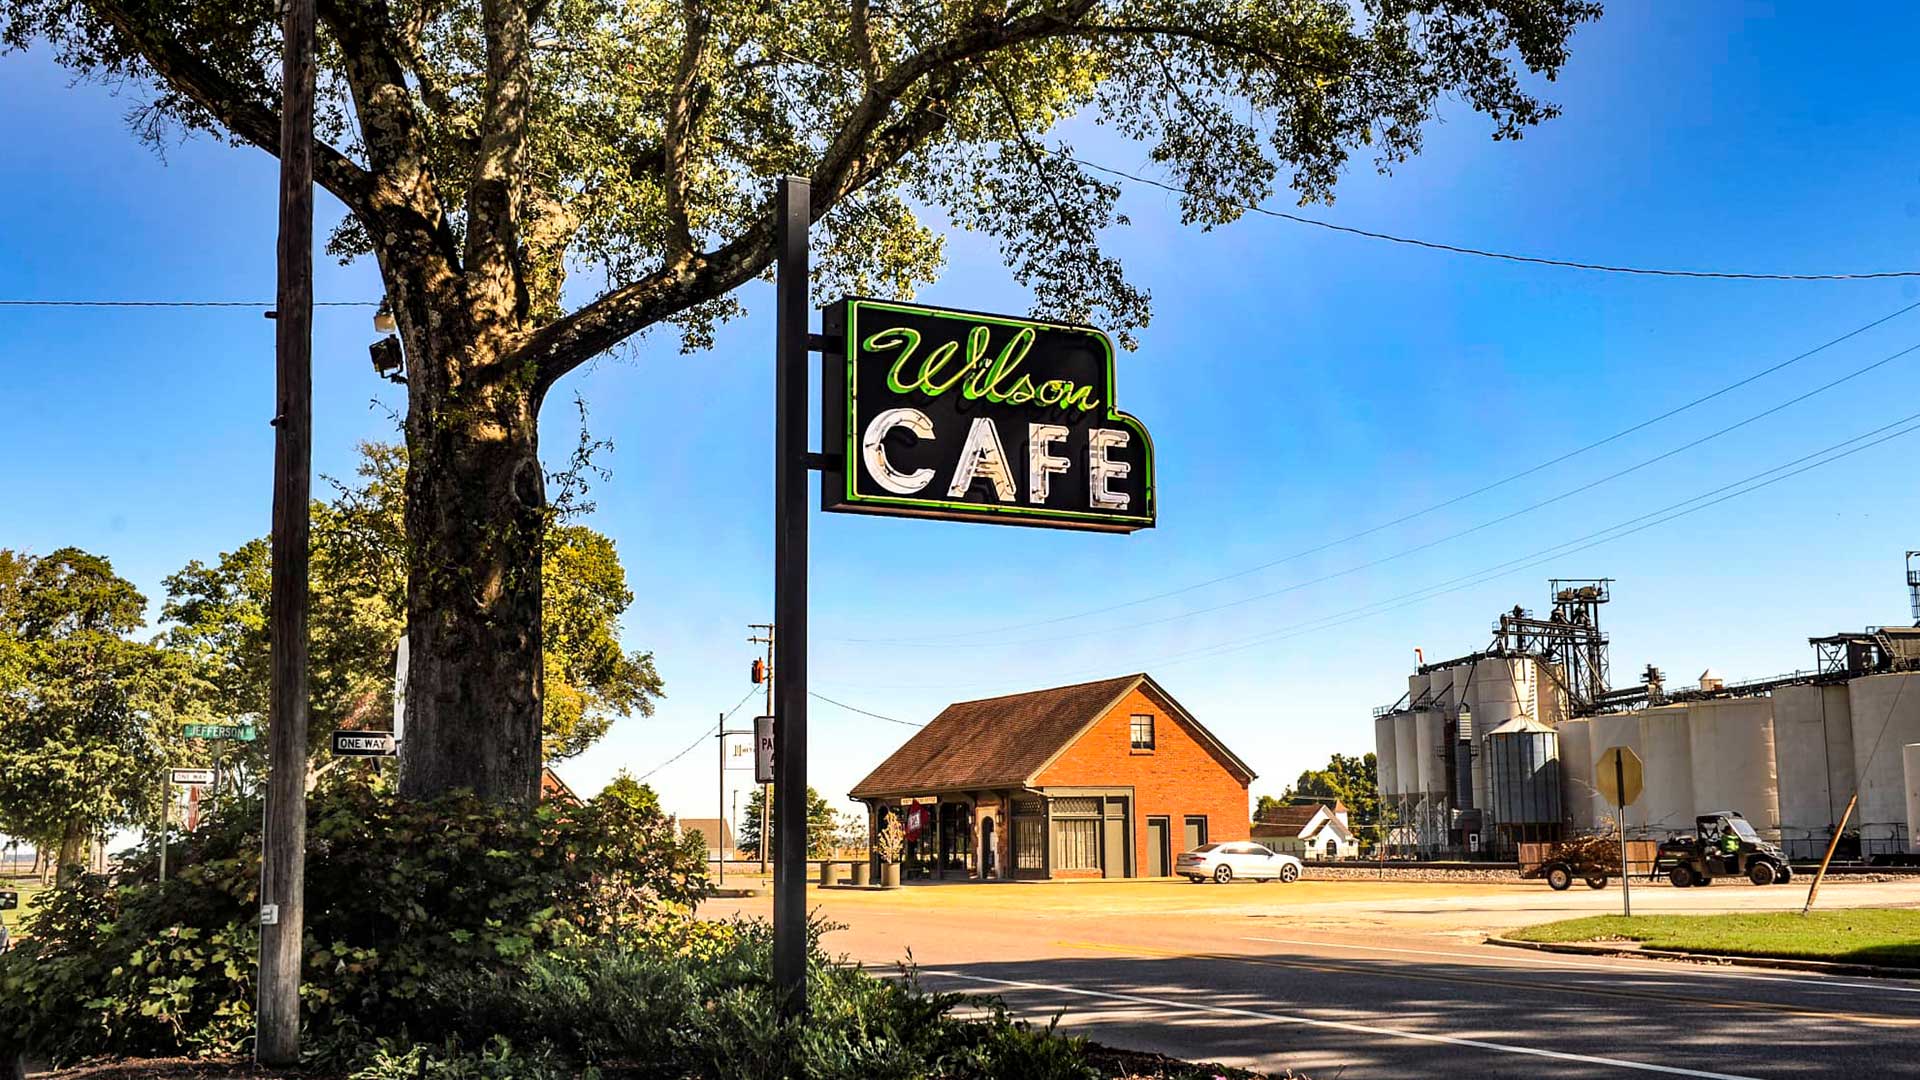 Wilson Café in on Arkansas Great River Road